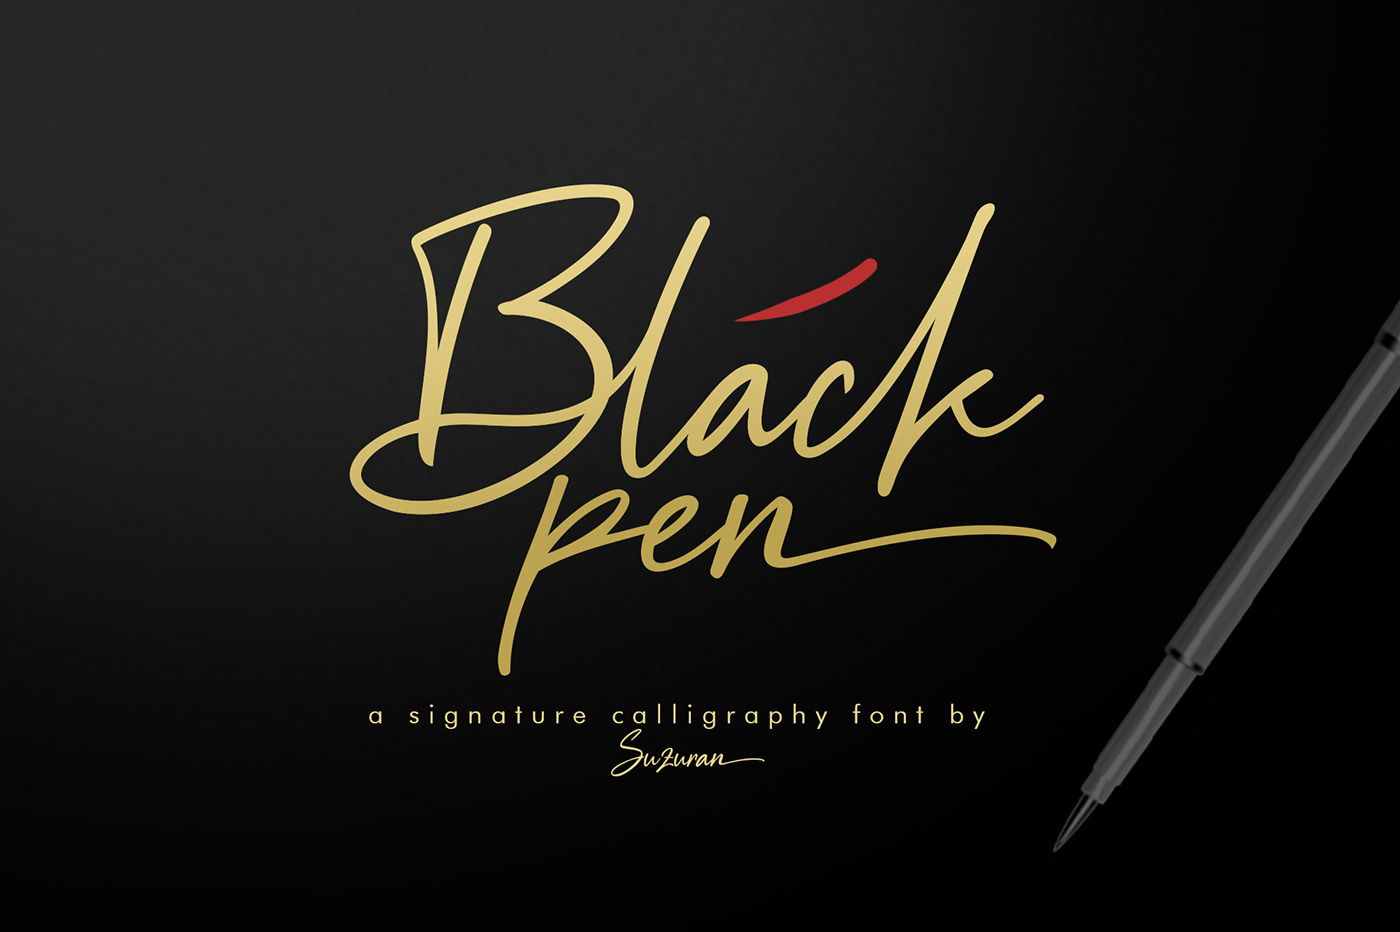 Black Pen Script Free Demo